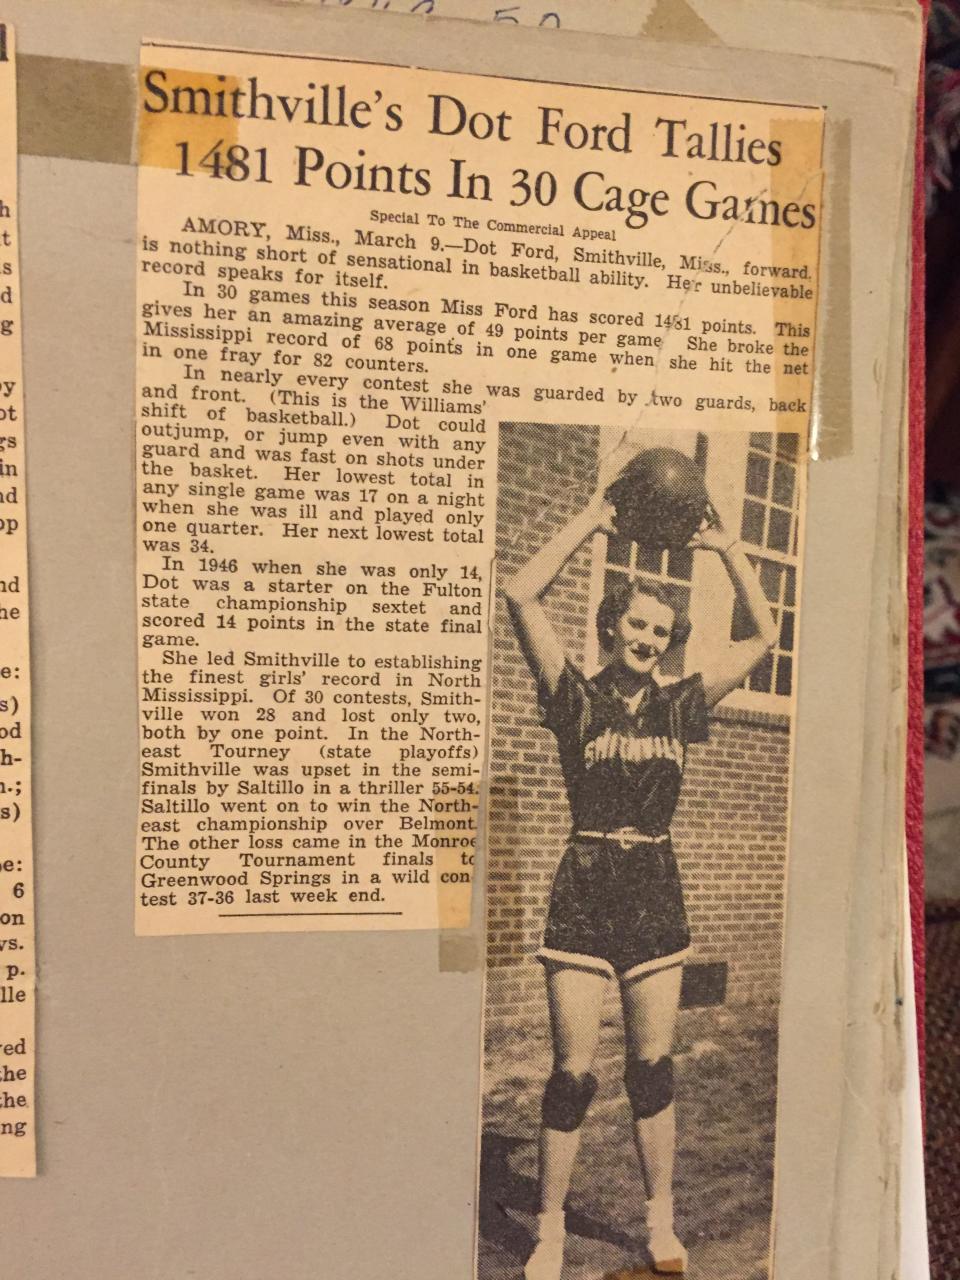 Joe Burrow's grandmother, Dot Ford, was a Mississippi high school basketball star